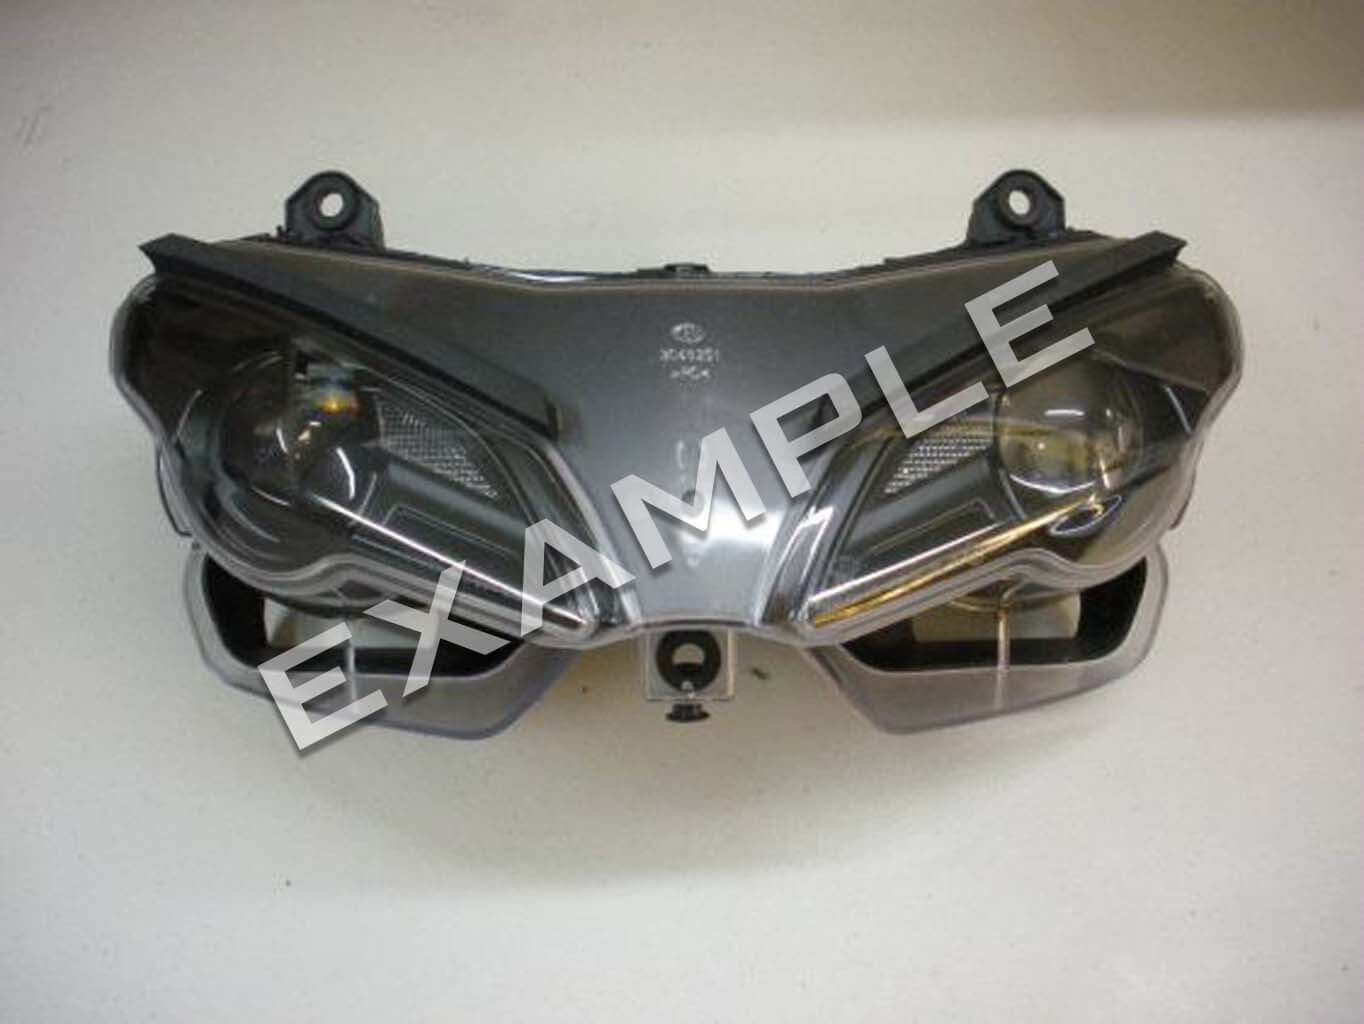 Ducati 848 / 1098 / 18 bi-xenon HID headlight repair and upgrade kit